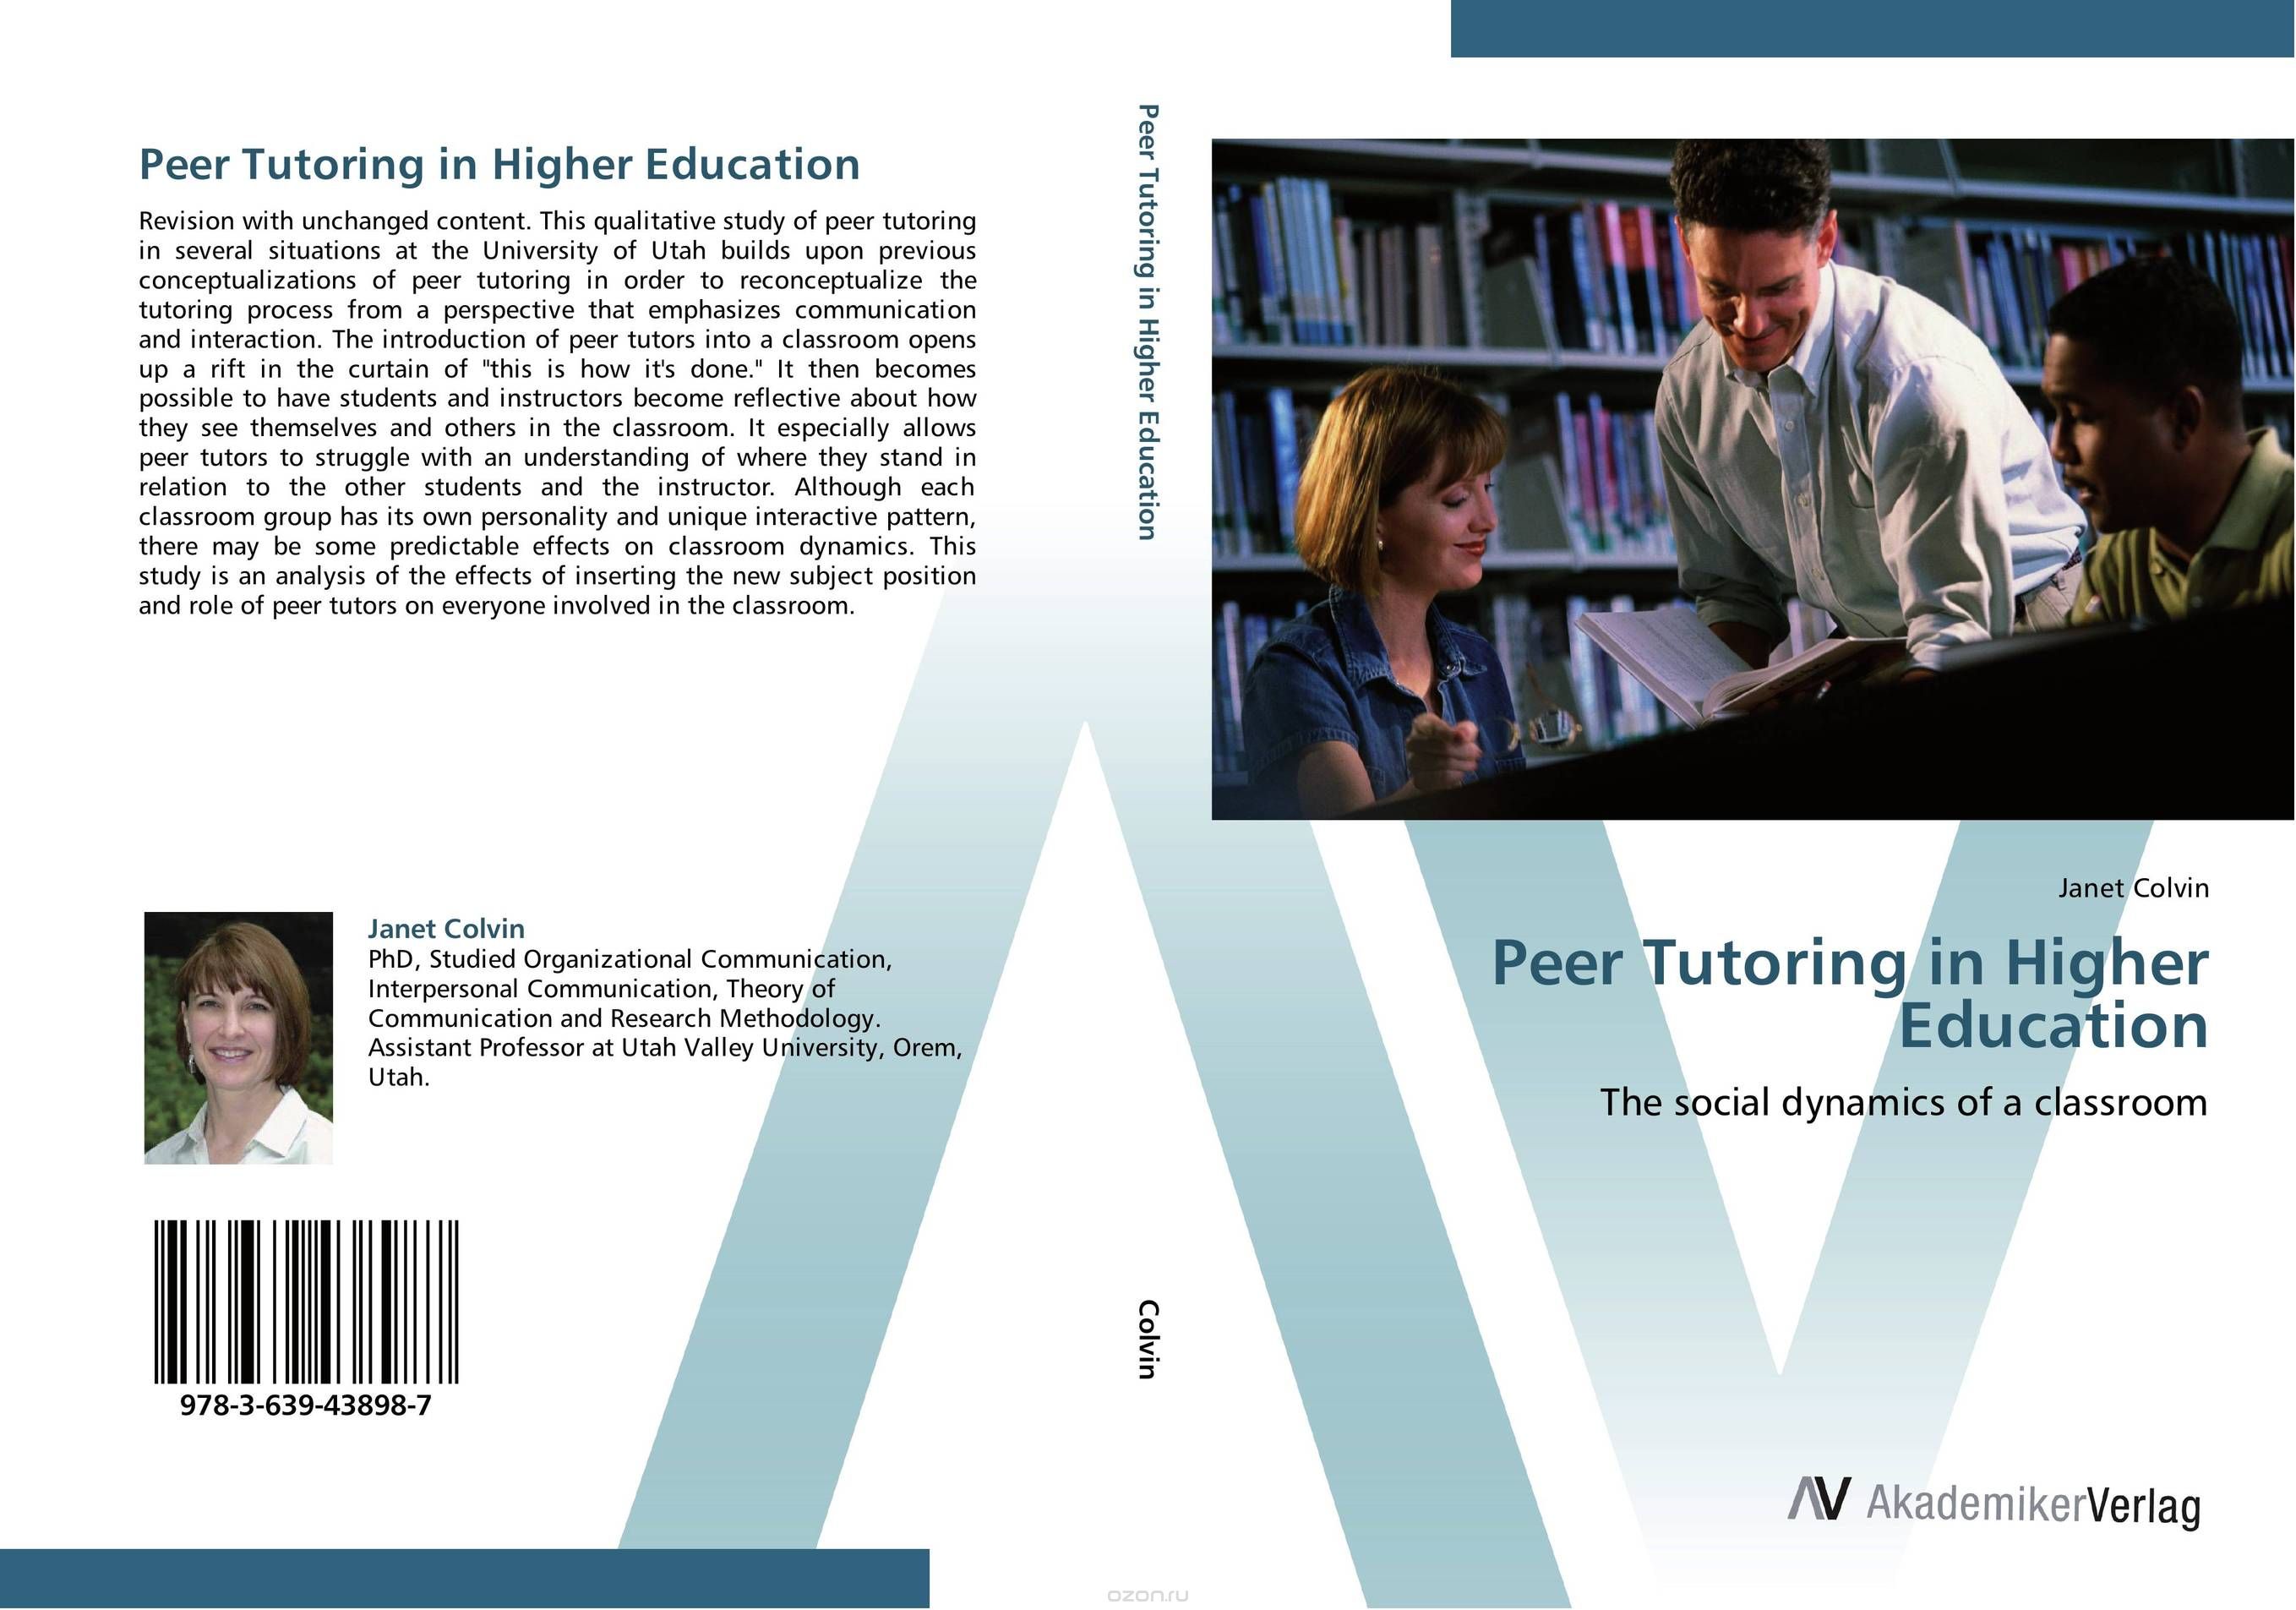 Скачать книгу "Peer Tutoring in Higher Education"